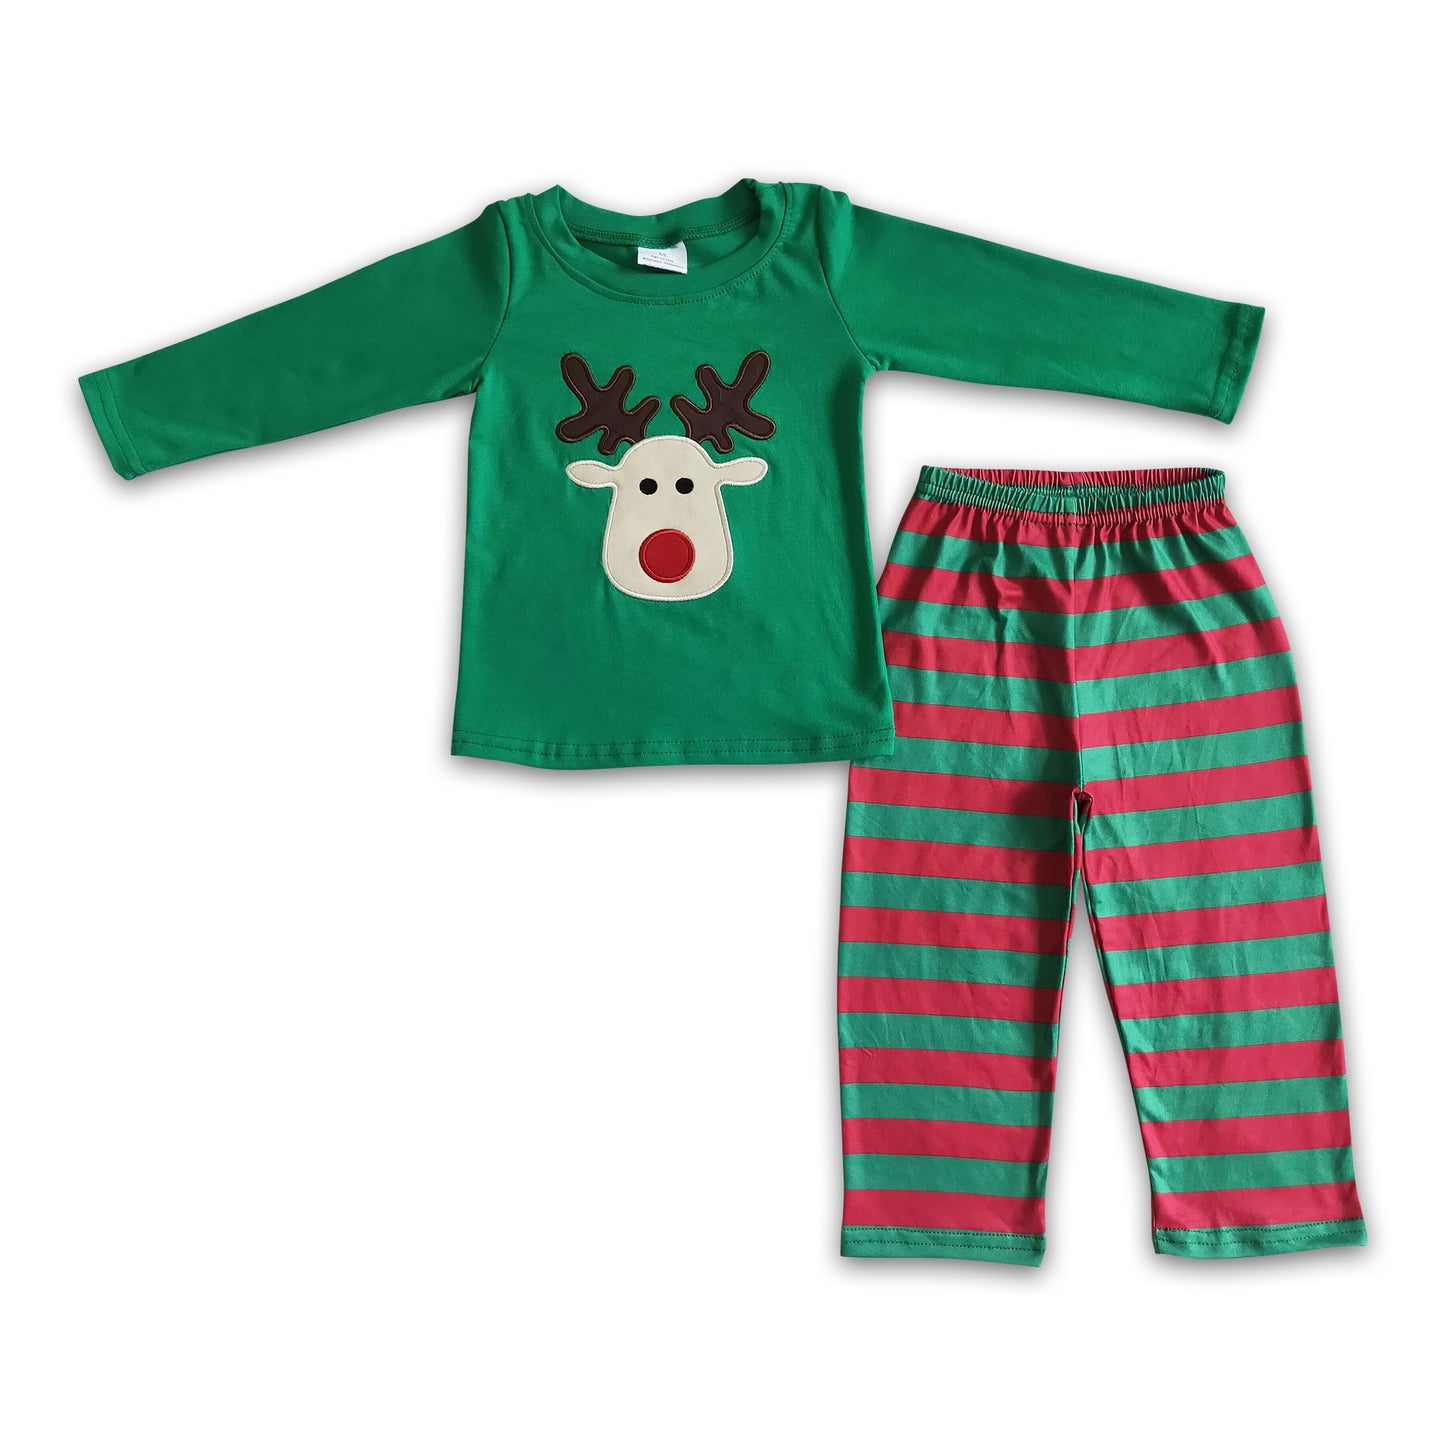 Reindeer embroidery shirt stripe pants boy Christmas clothing